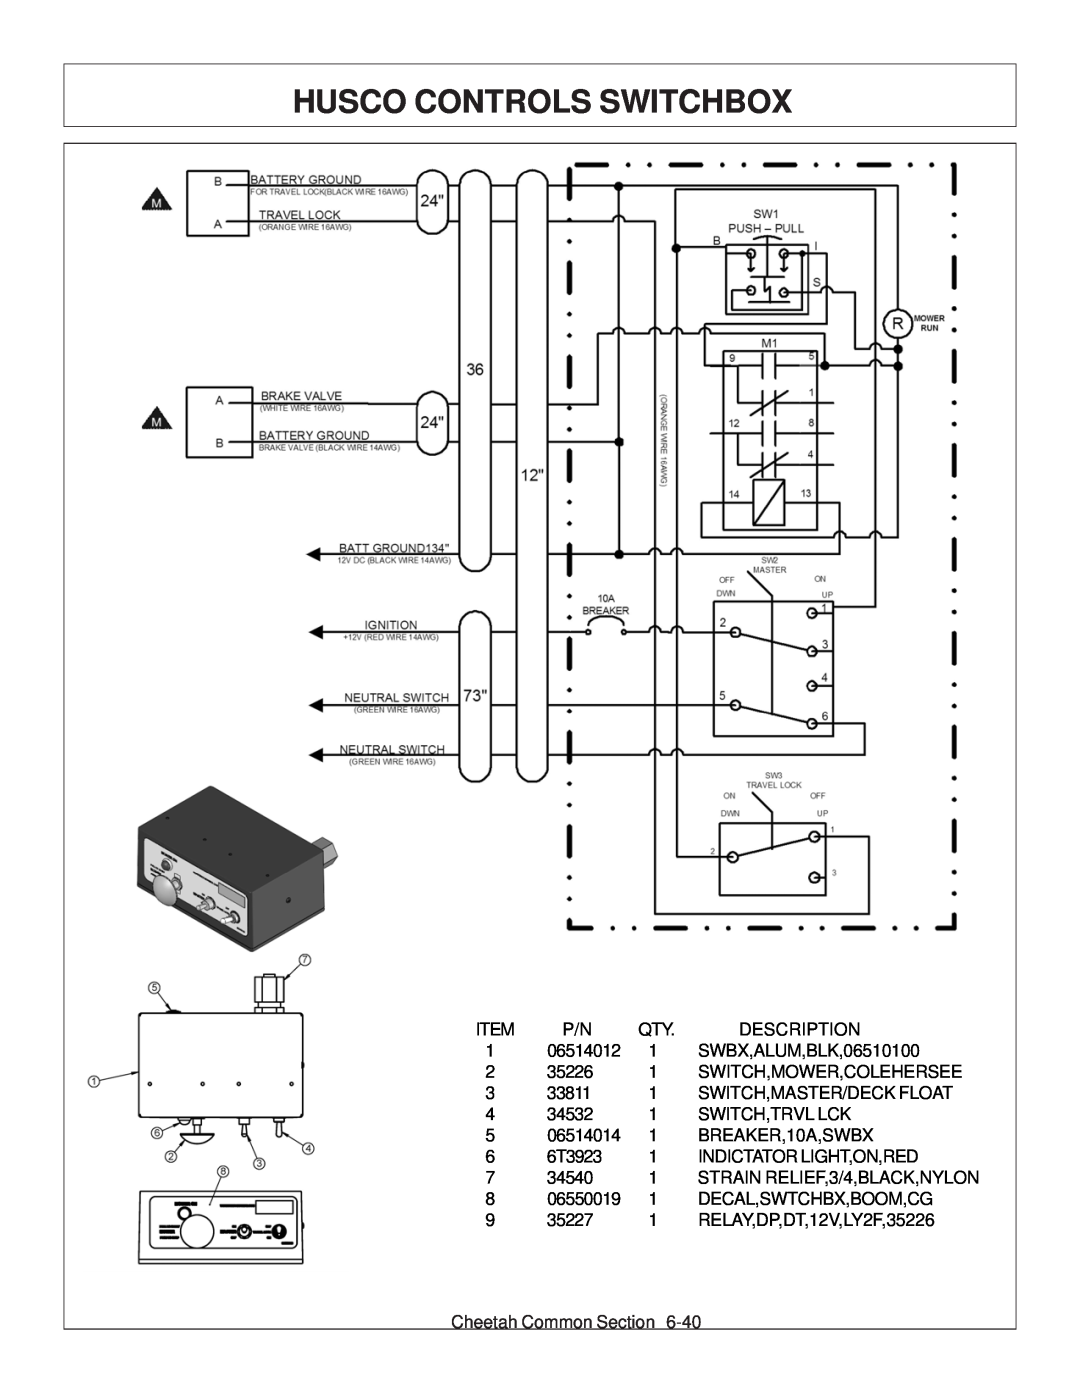 Tiger Products Co., Ltd JD 5101E, JD 5083E, JD 5093E manual Husco Controls Switchbox, Cheetah Common Section 